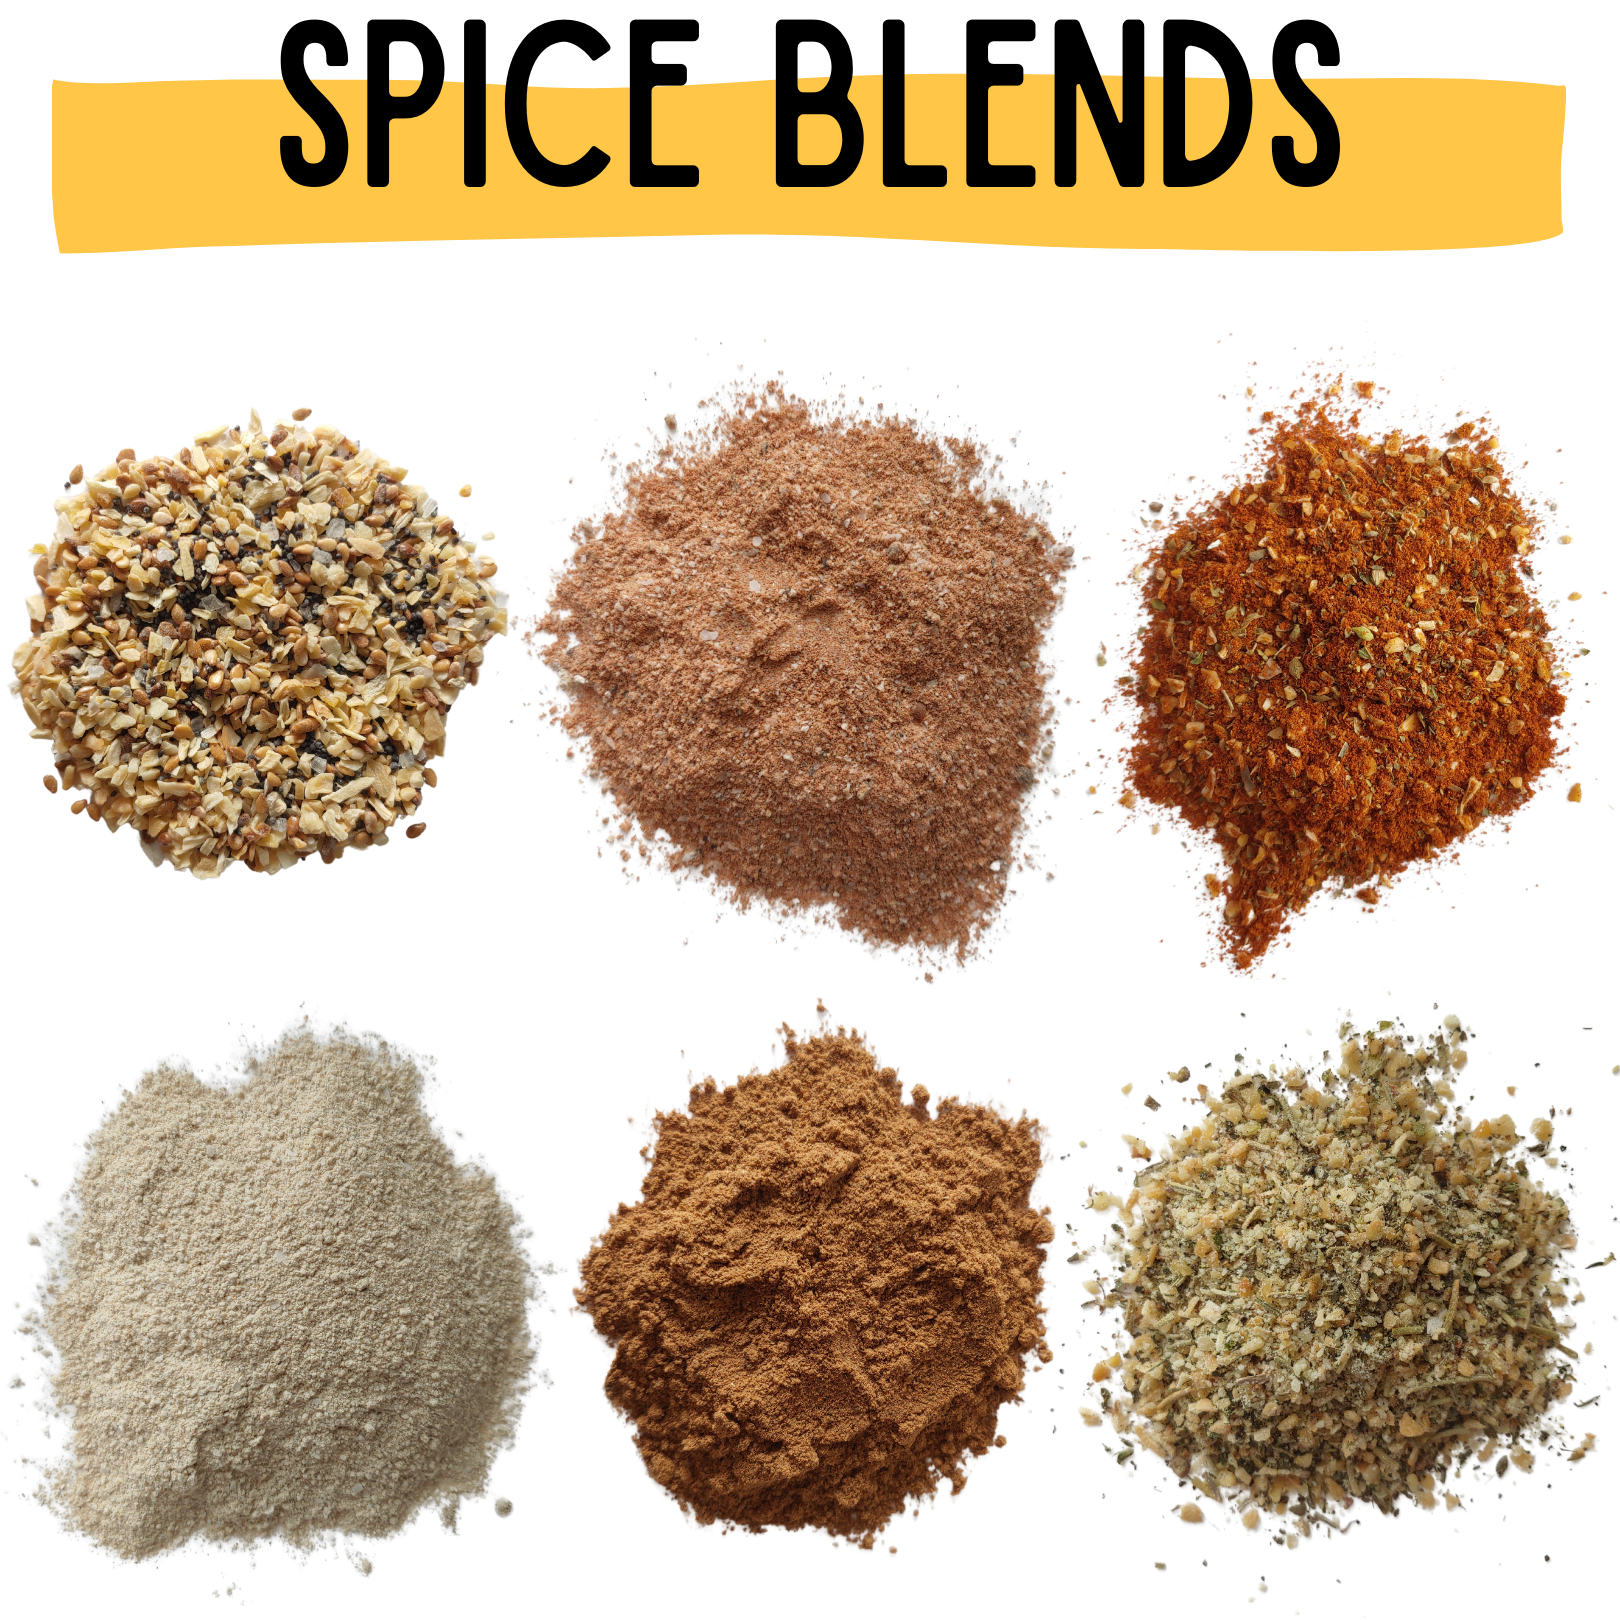 Handmade spice blends